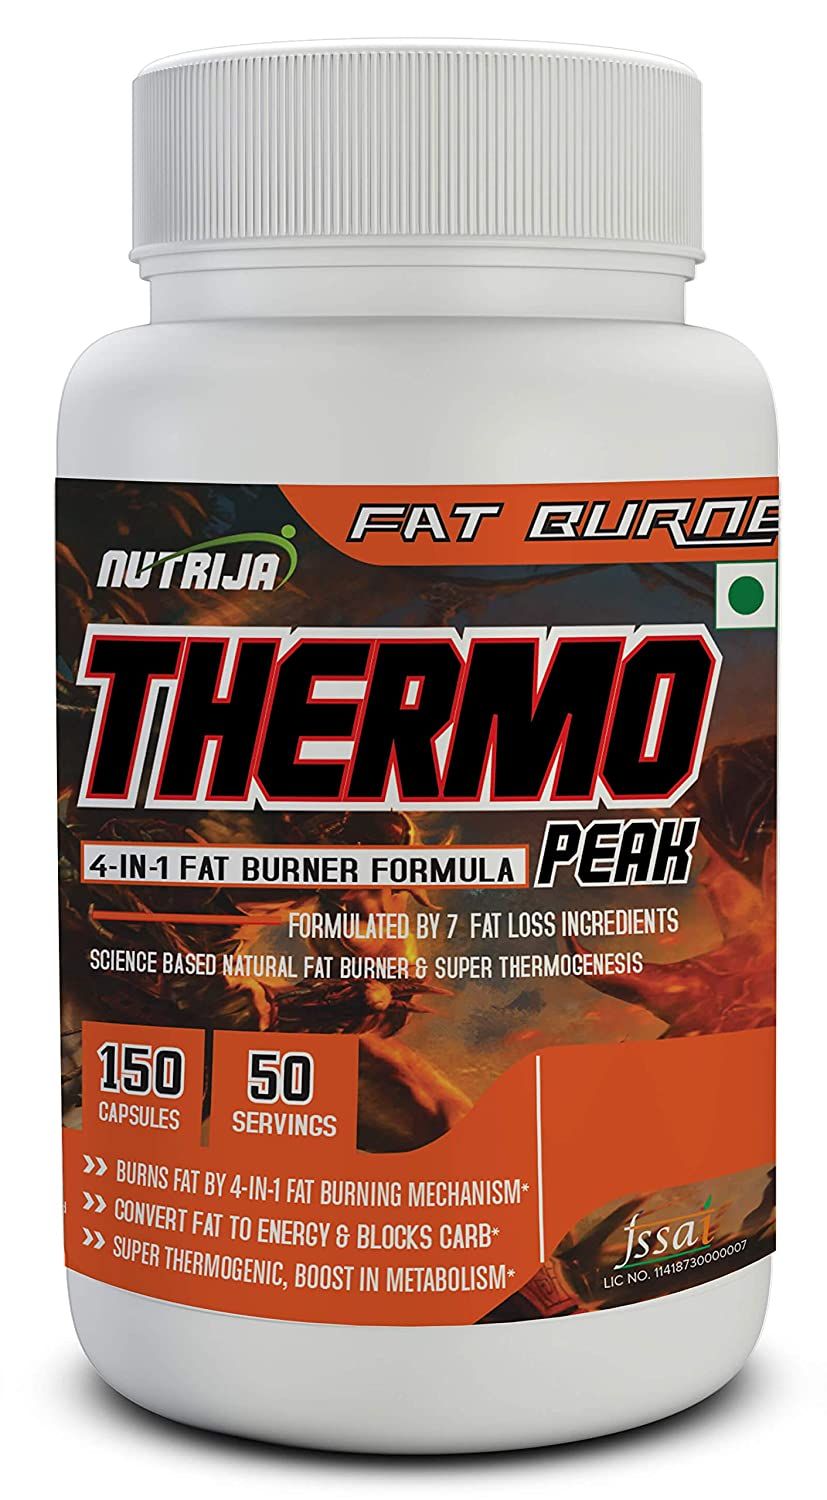 Nutrija Thermo Peak Fat Burner Image